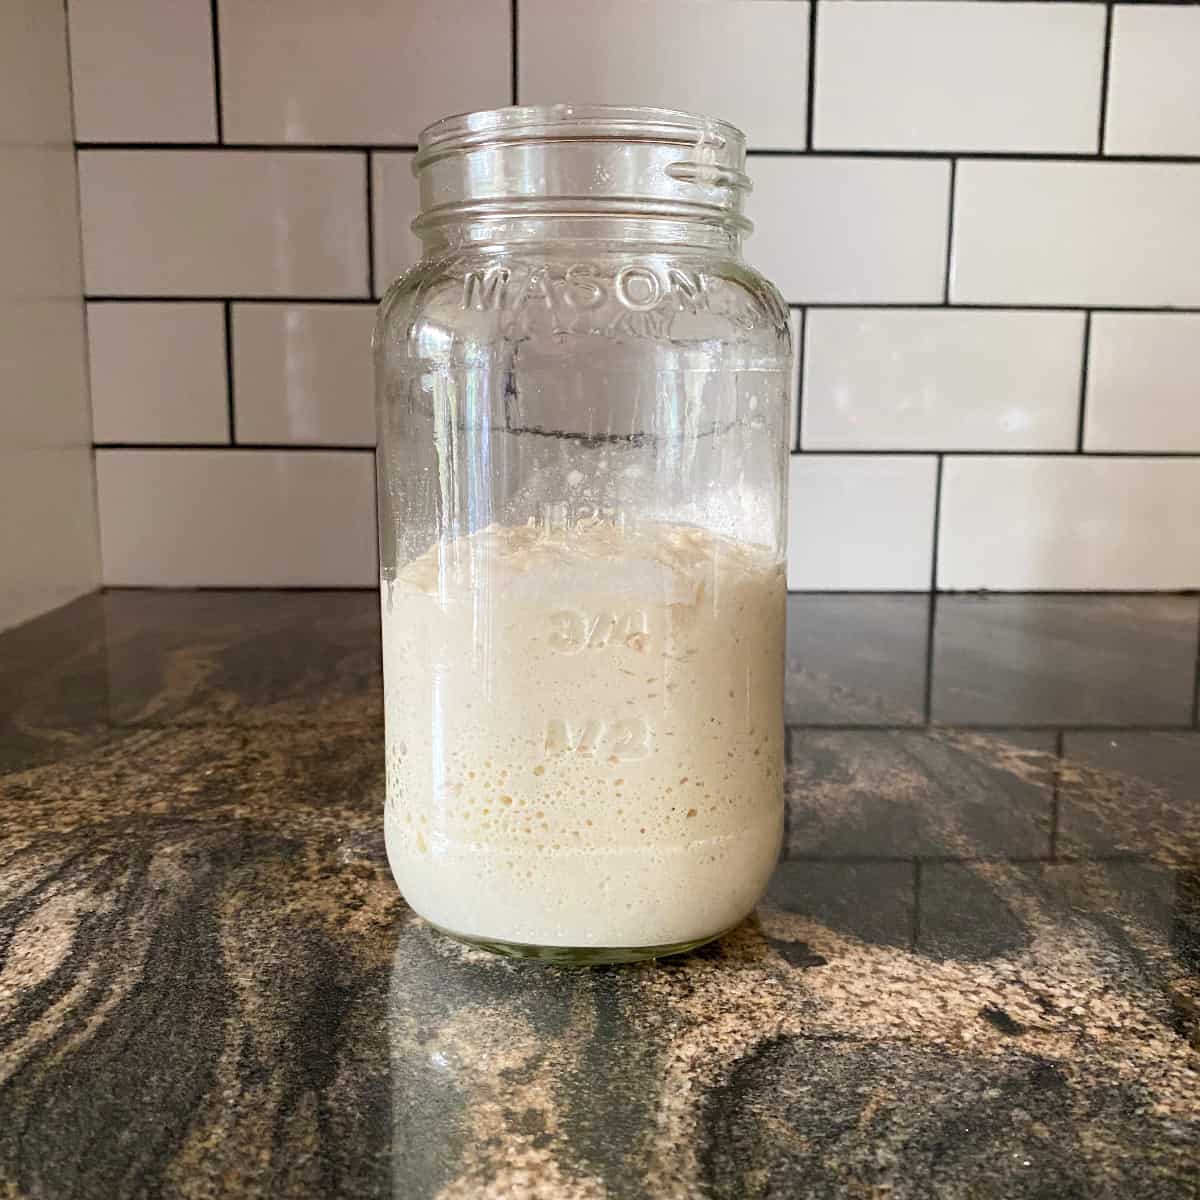 rising sourdough starter in a glass jar